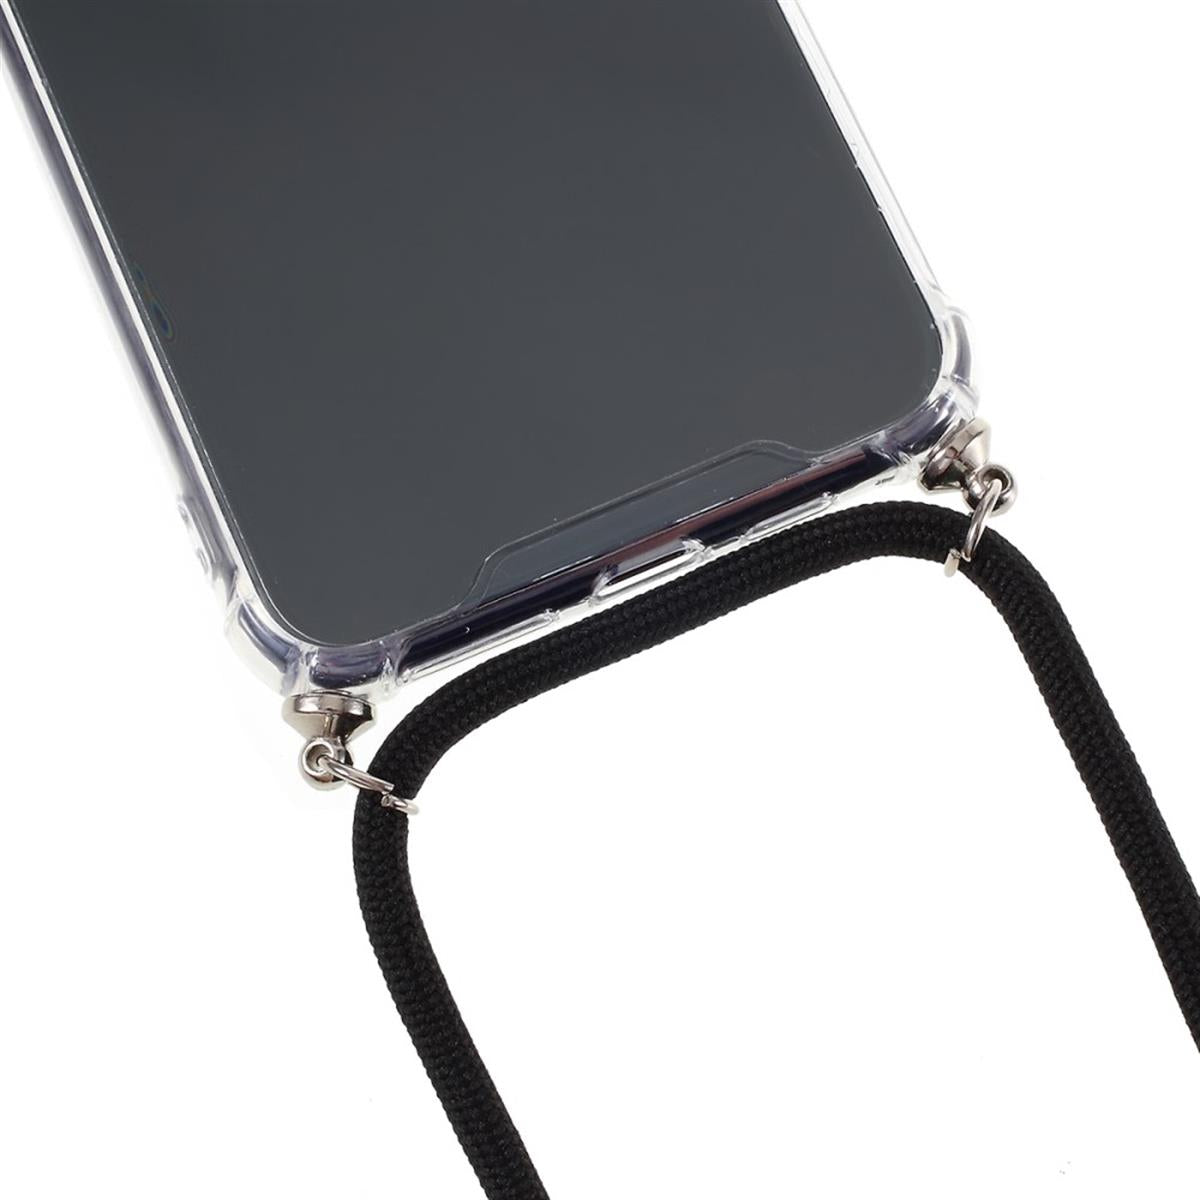 Hülle für Apple iPhone 11 Pro Handyhülle Band Handykette Kordel Silikon Case Schnur klar